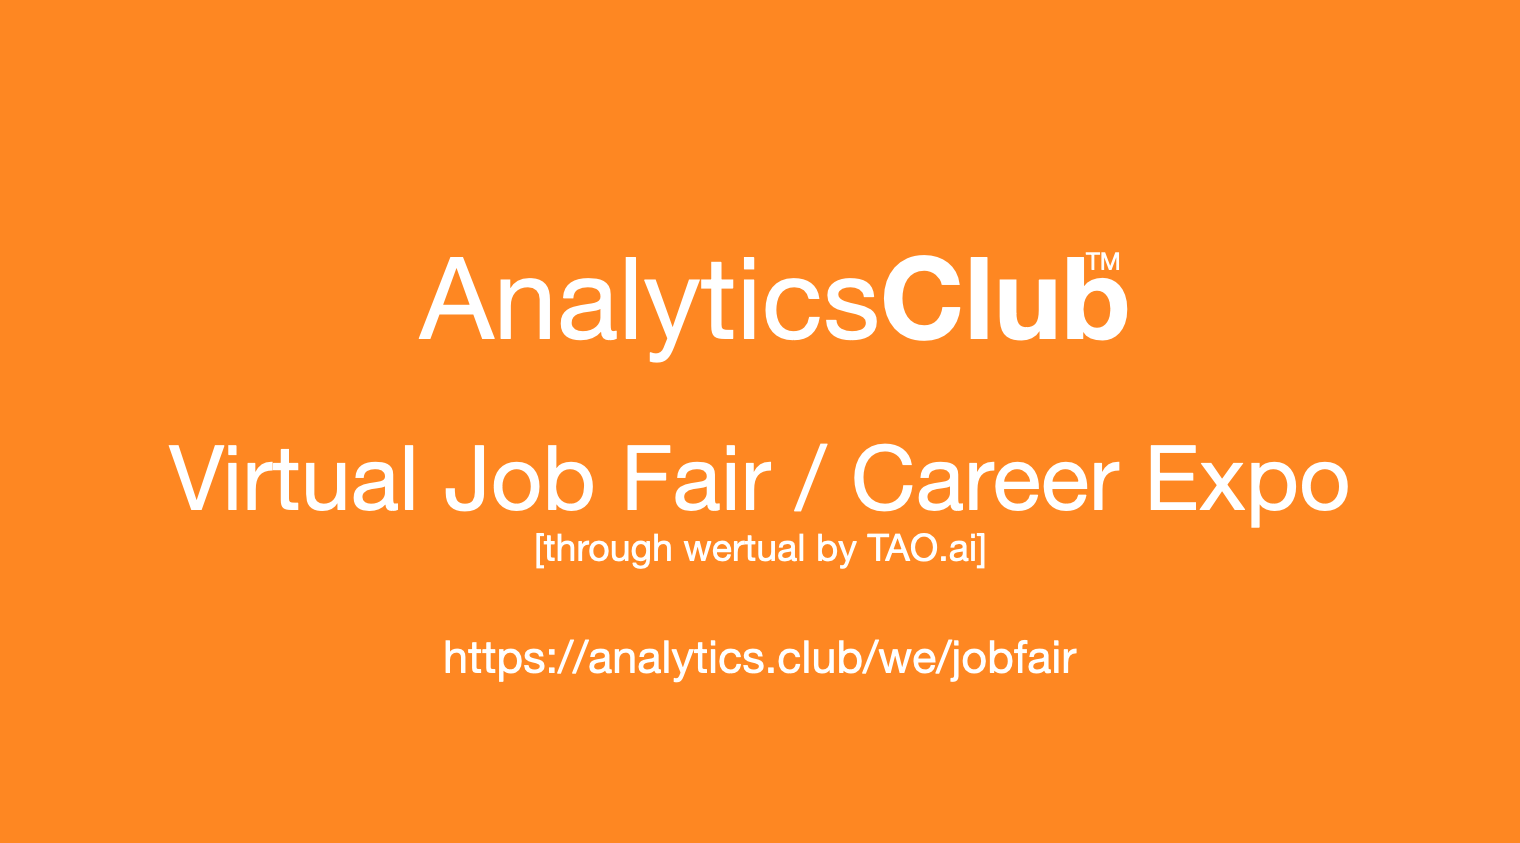 #AnalyticsClub Virtual Job Fair / Career Expo Event #San Francisco